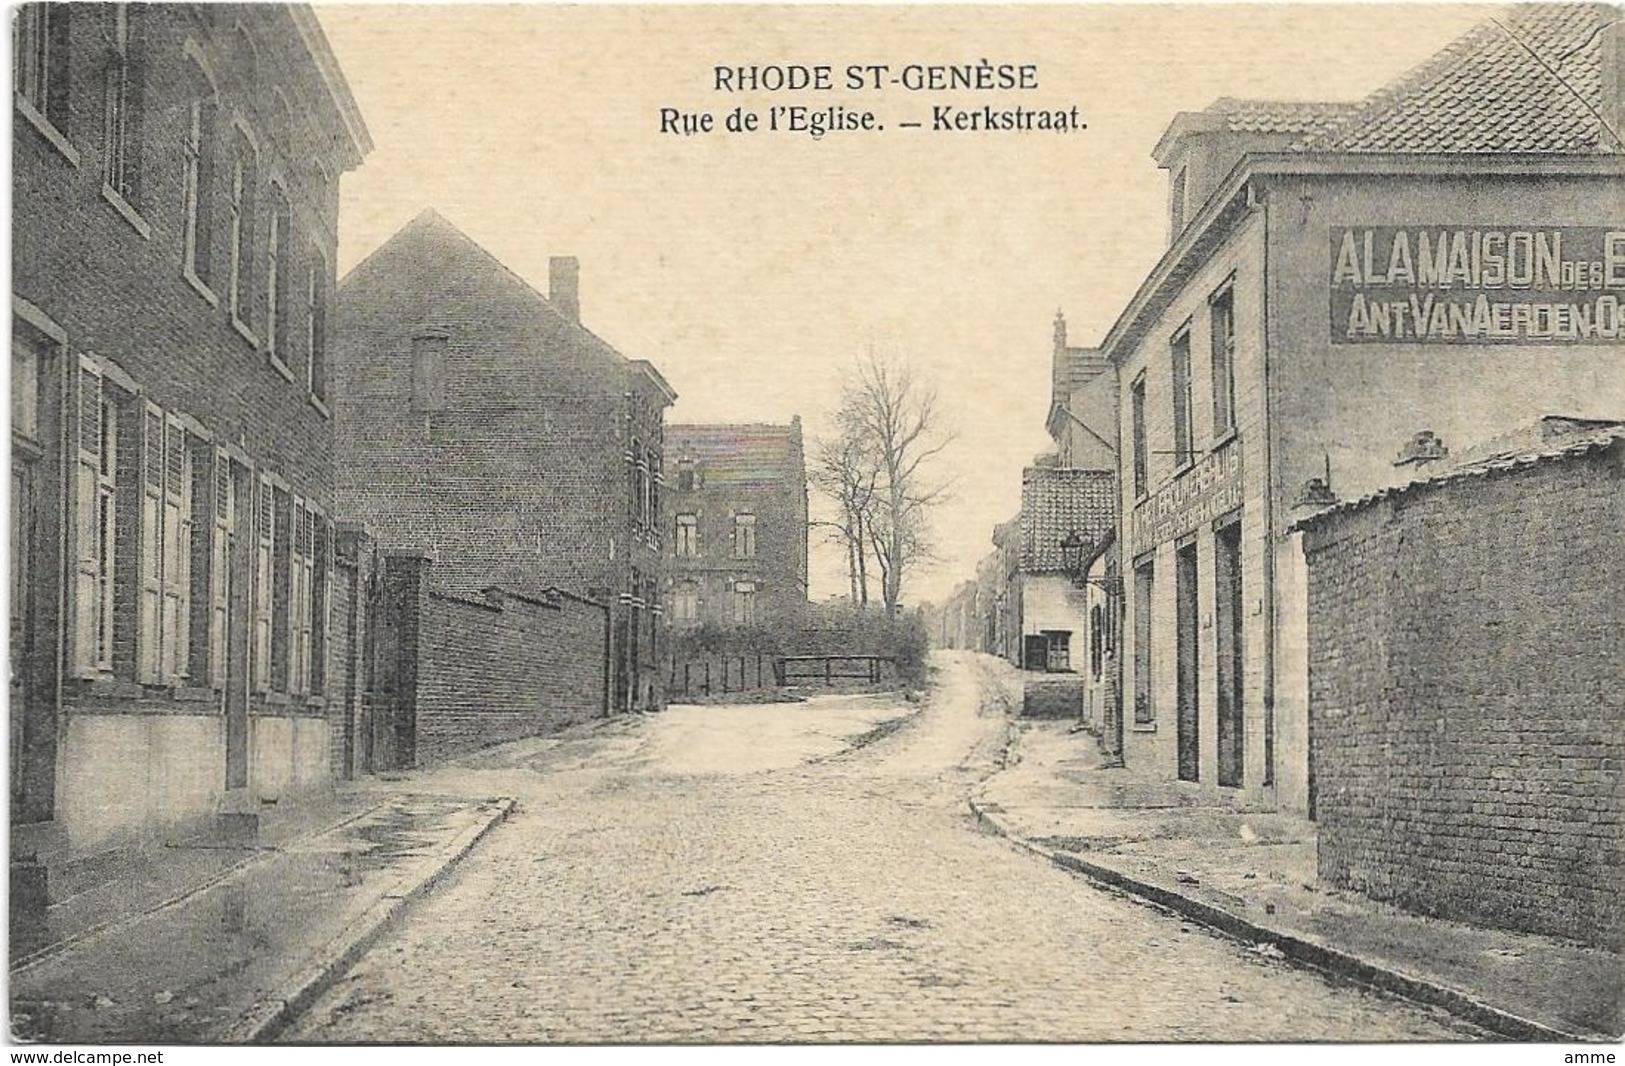 Sint-Genesius-Rode  -  Rhode-St.-Genèse   *  Rue De L'Eglise  - Kerkstraat - Rhode-St-Genèse - St-Genesius-Rode